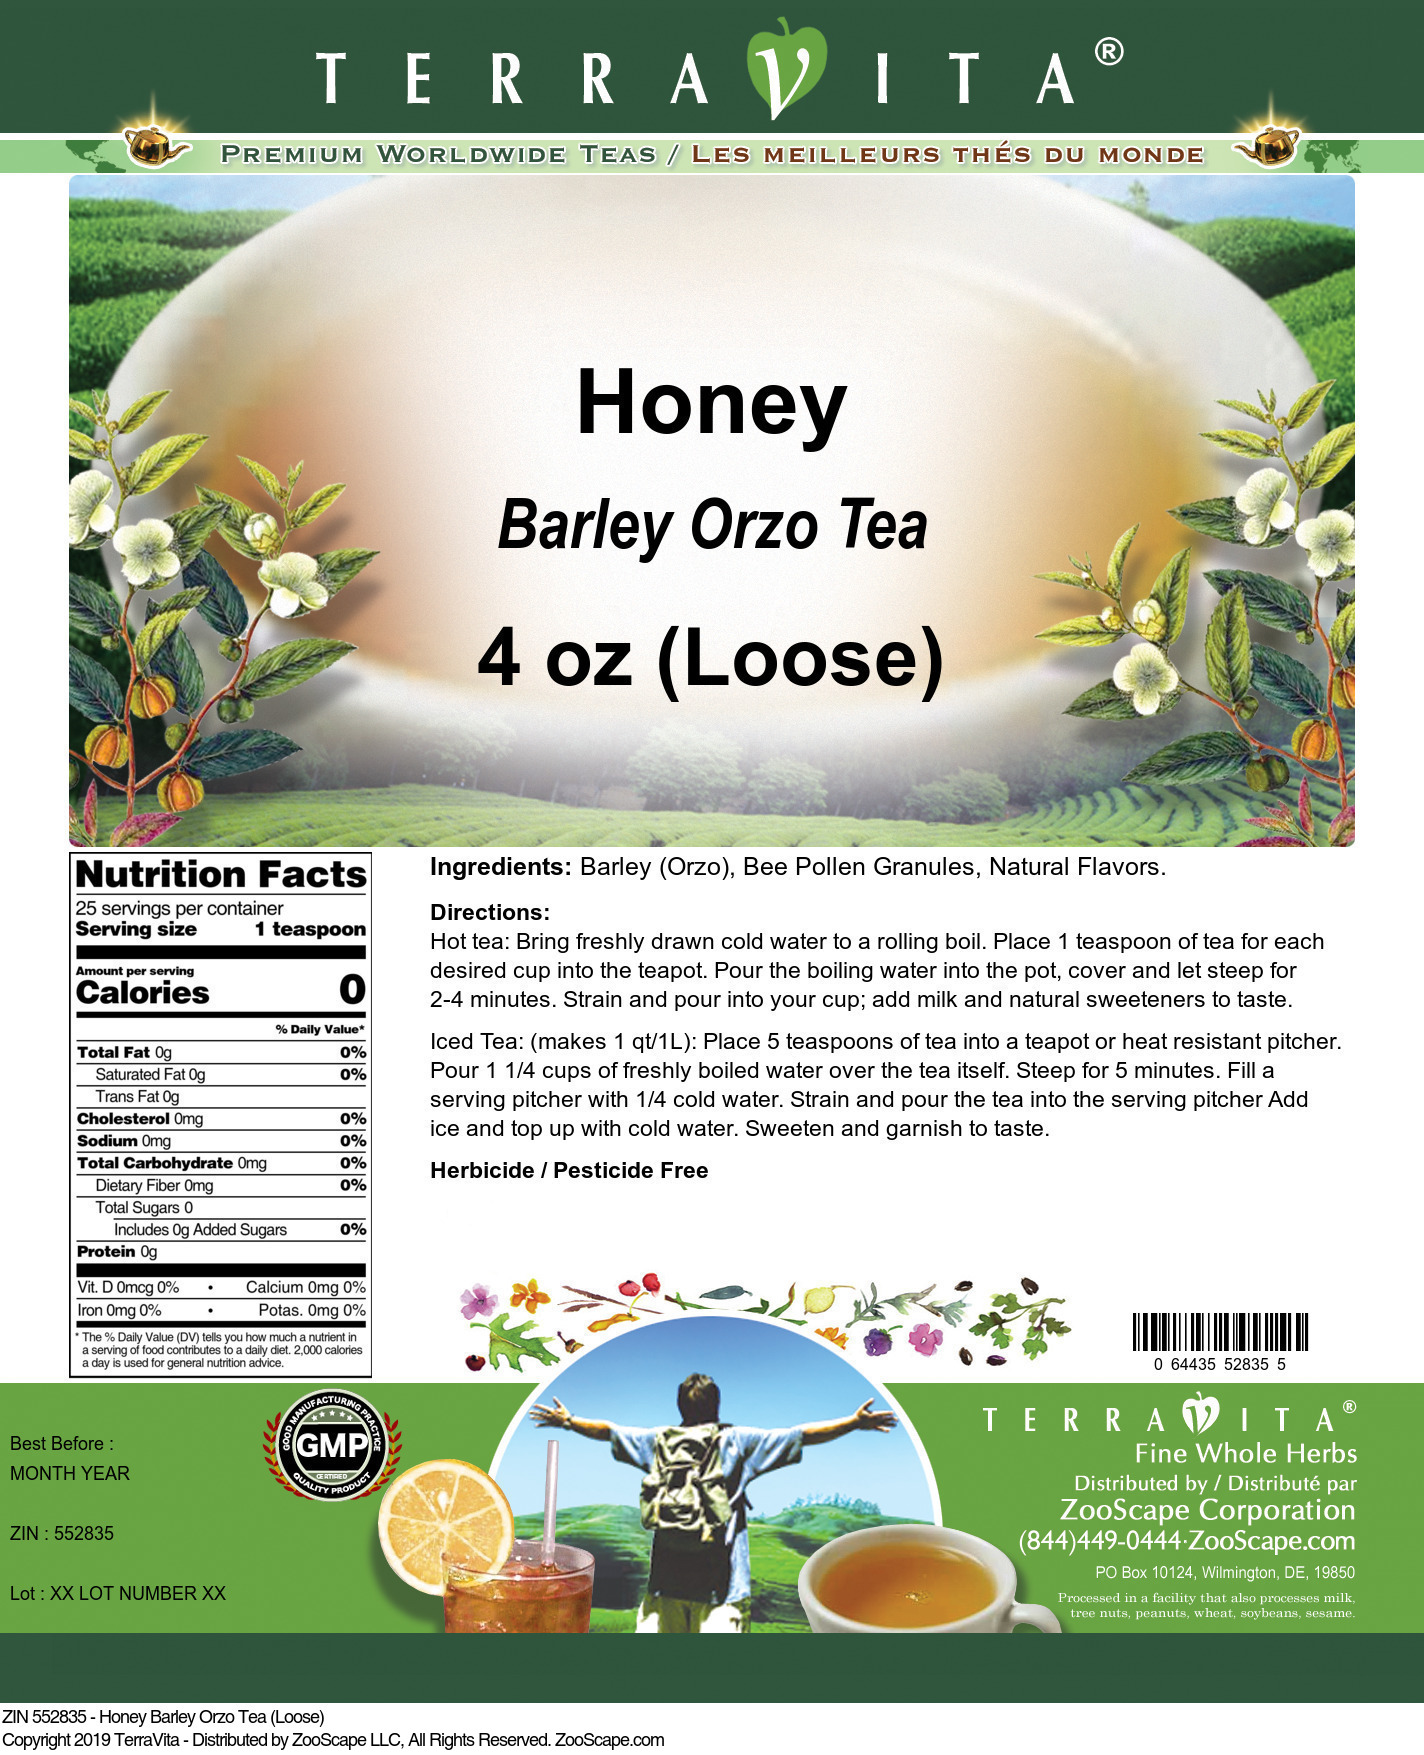 Honey Barley Orzo Tea (Loose) - Label